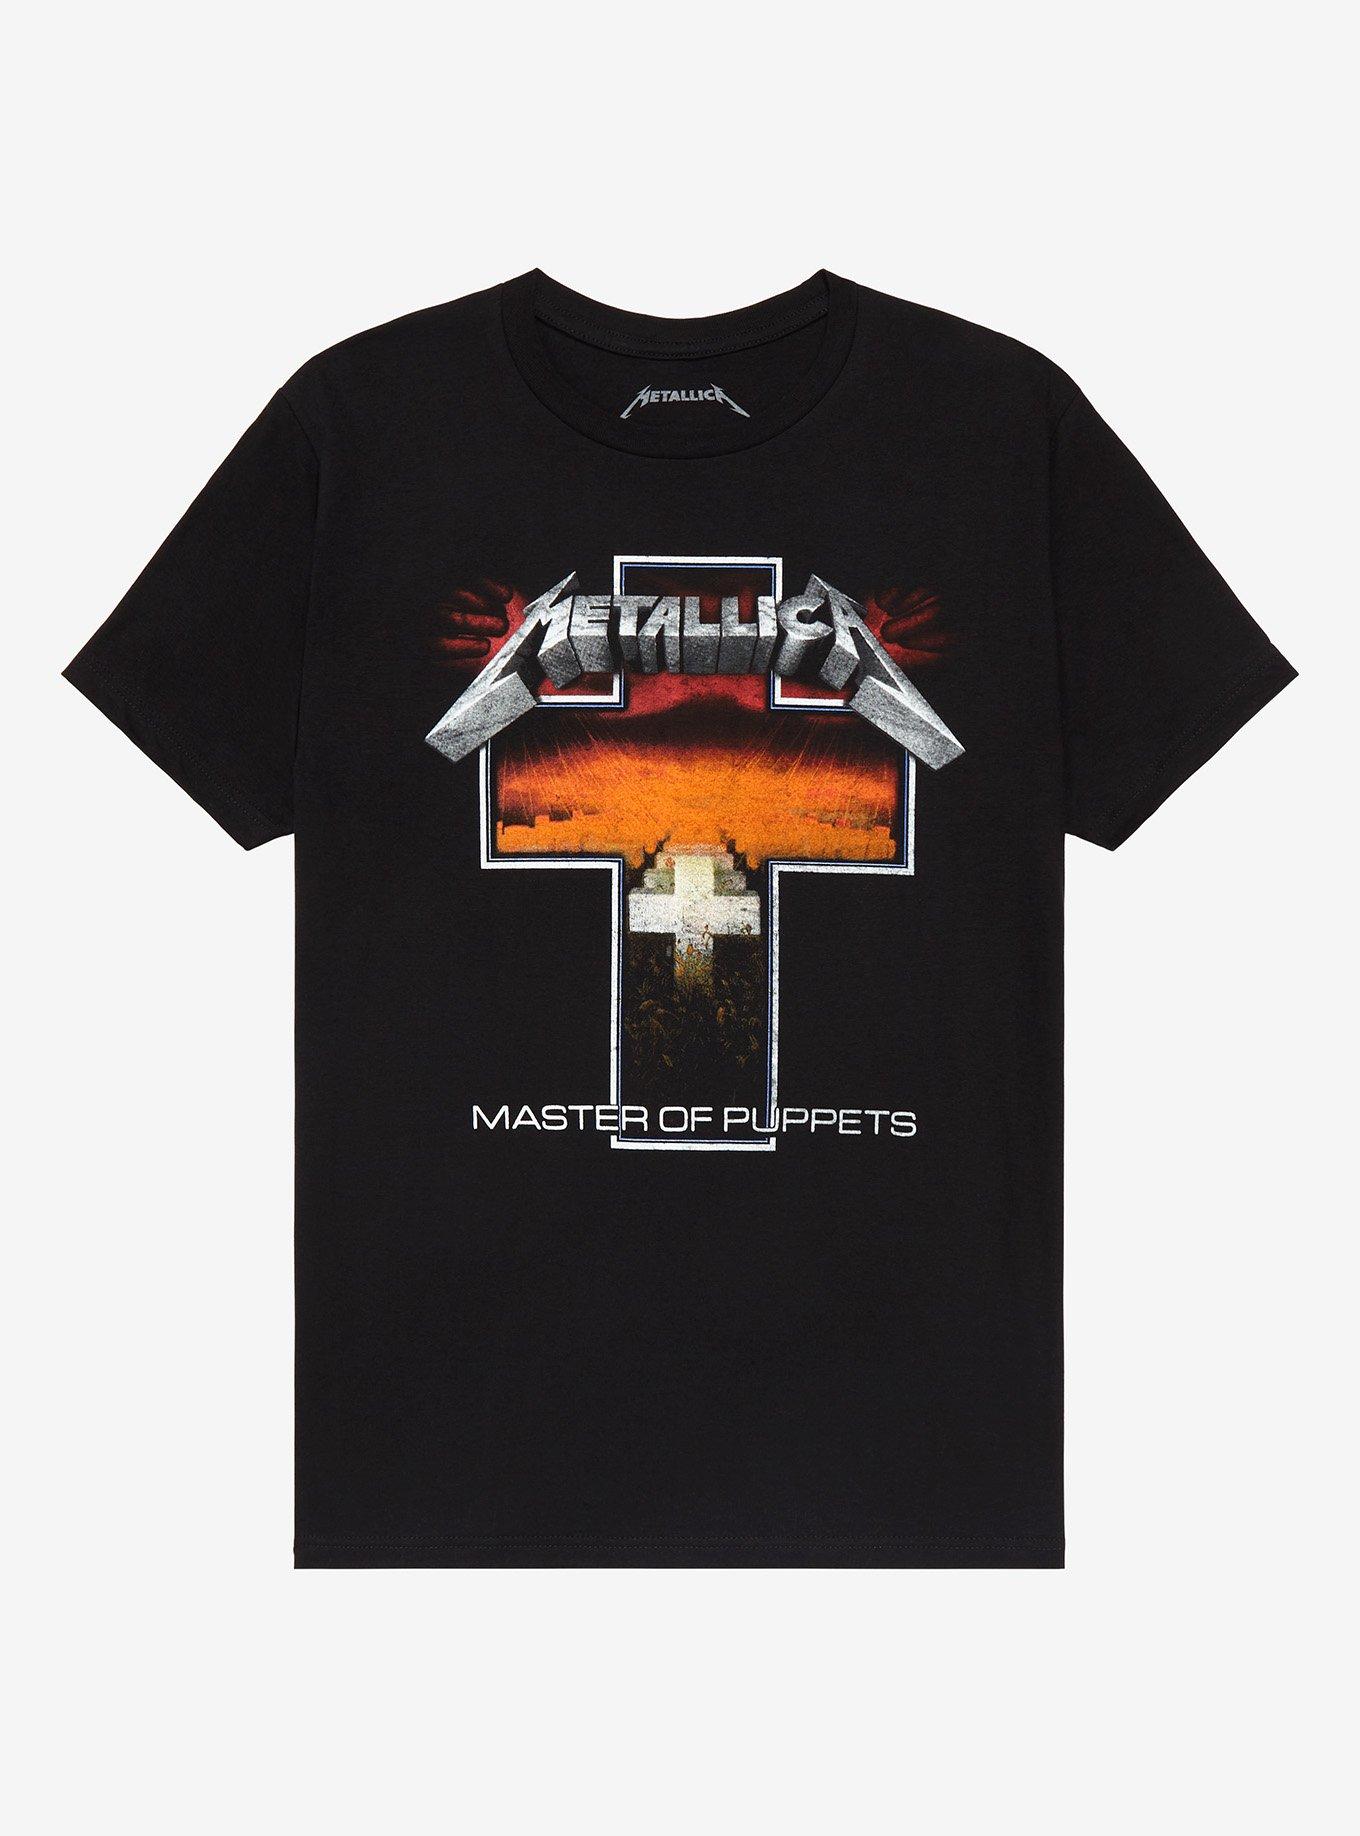 Gedragen Keel dutje OFFICIAL Metallica T-Shirts & Merchandise | Hot Topic